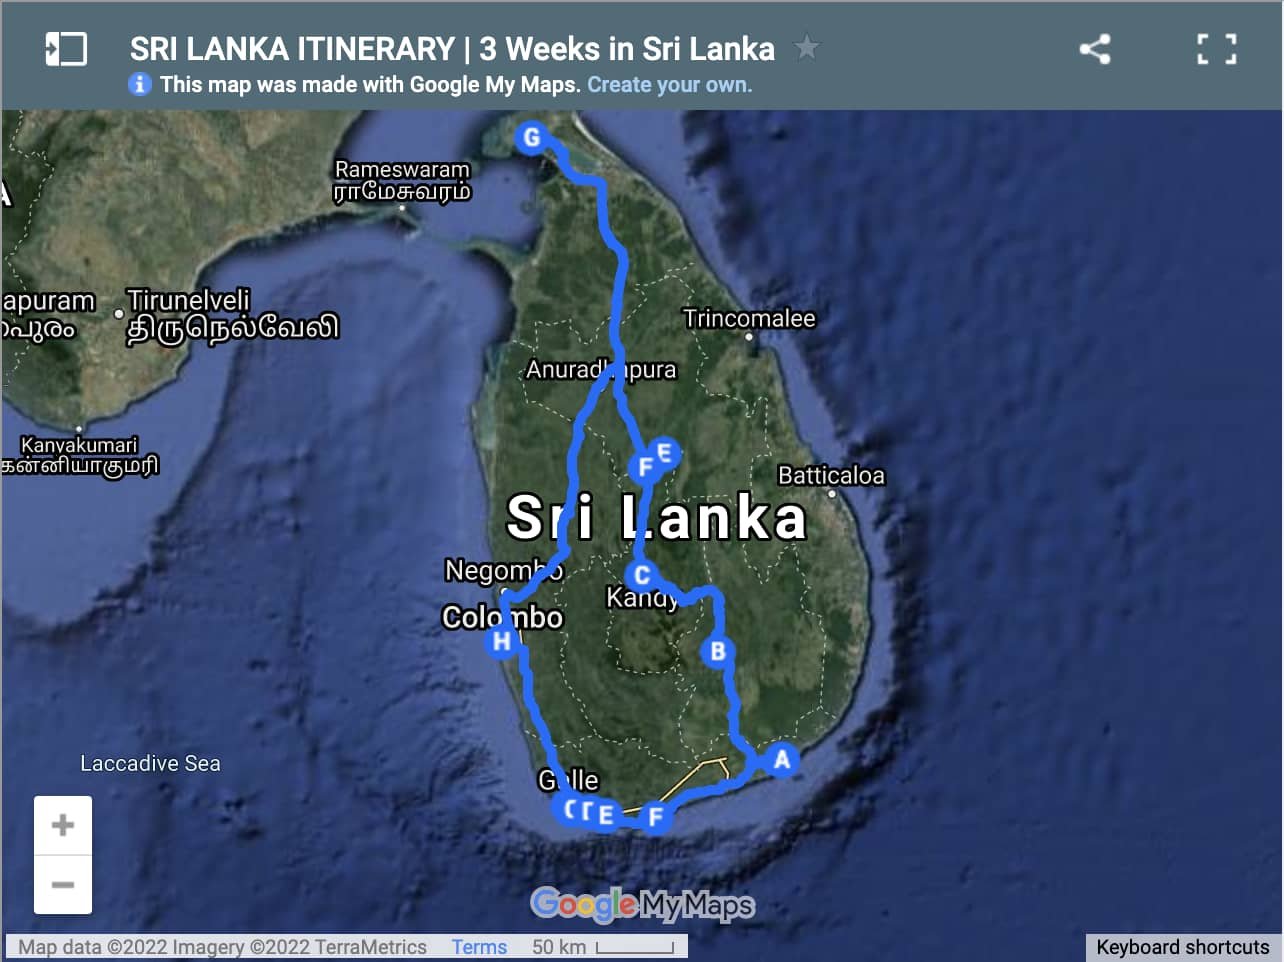 A complete Sri Lanka itinerary